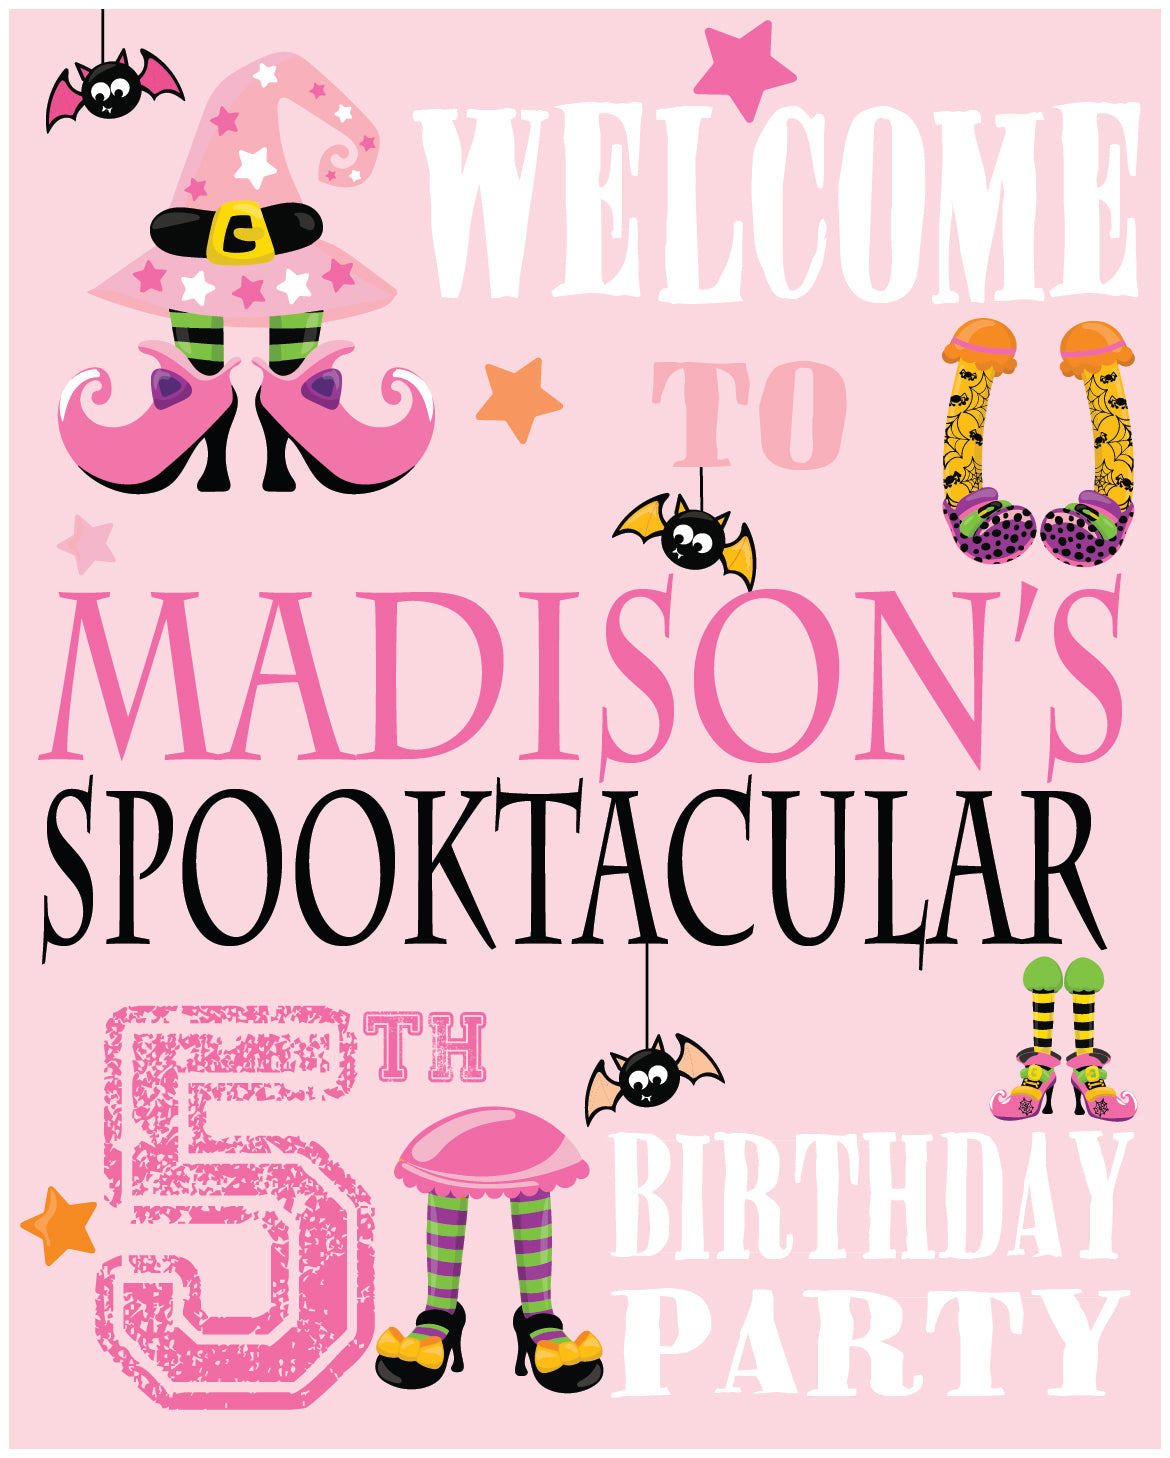 cute spookataculer welcome sign